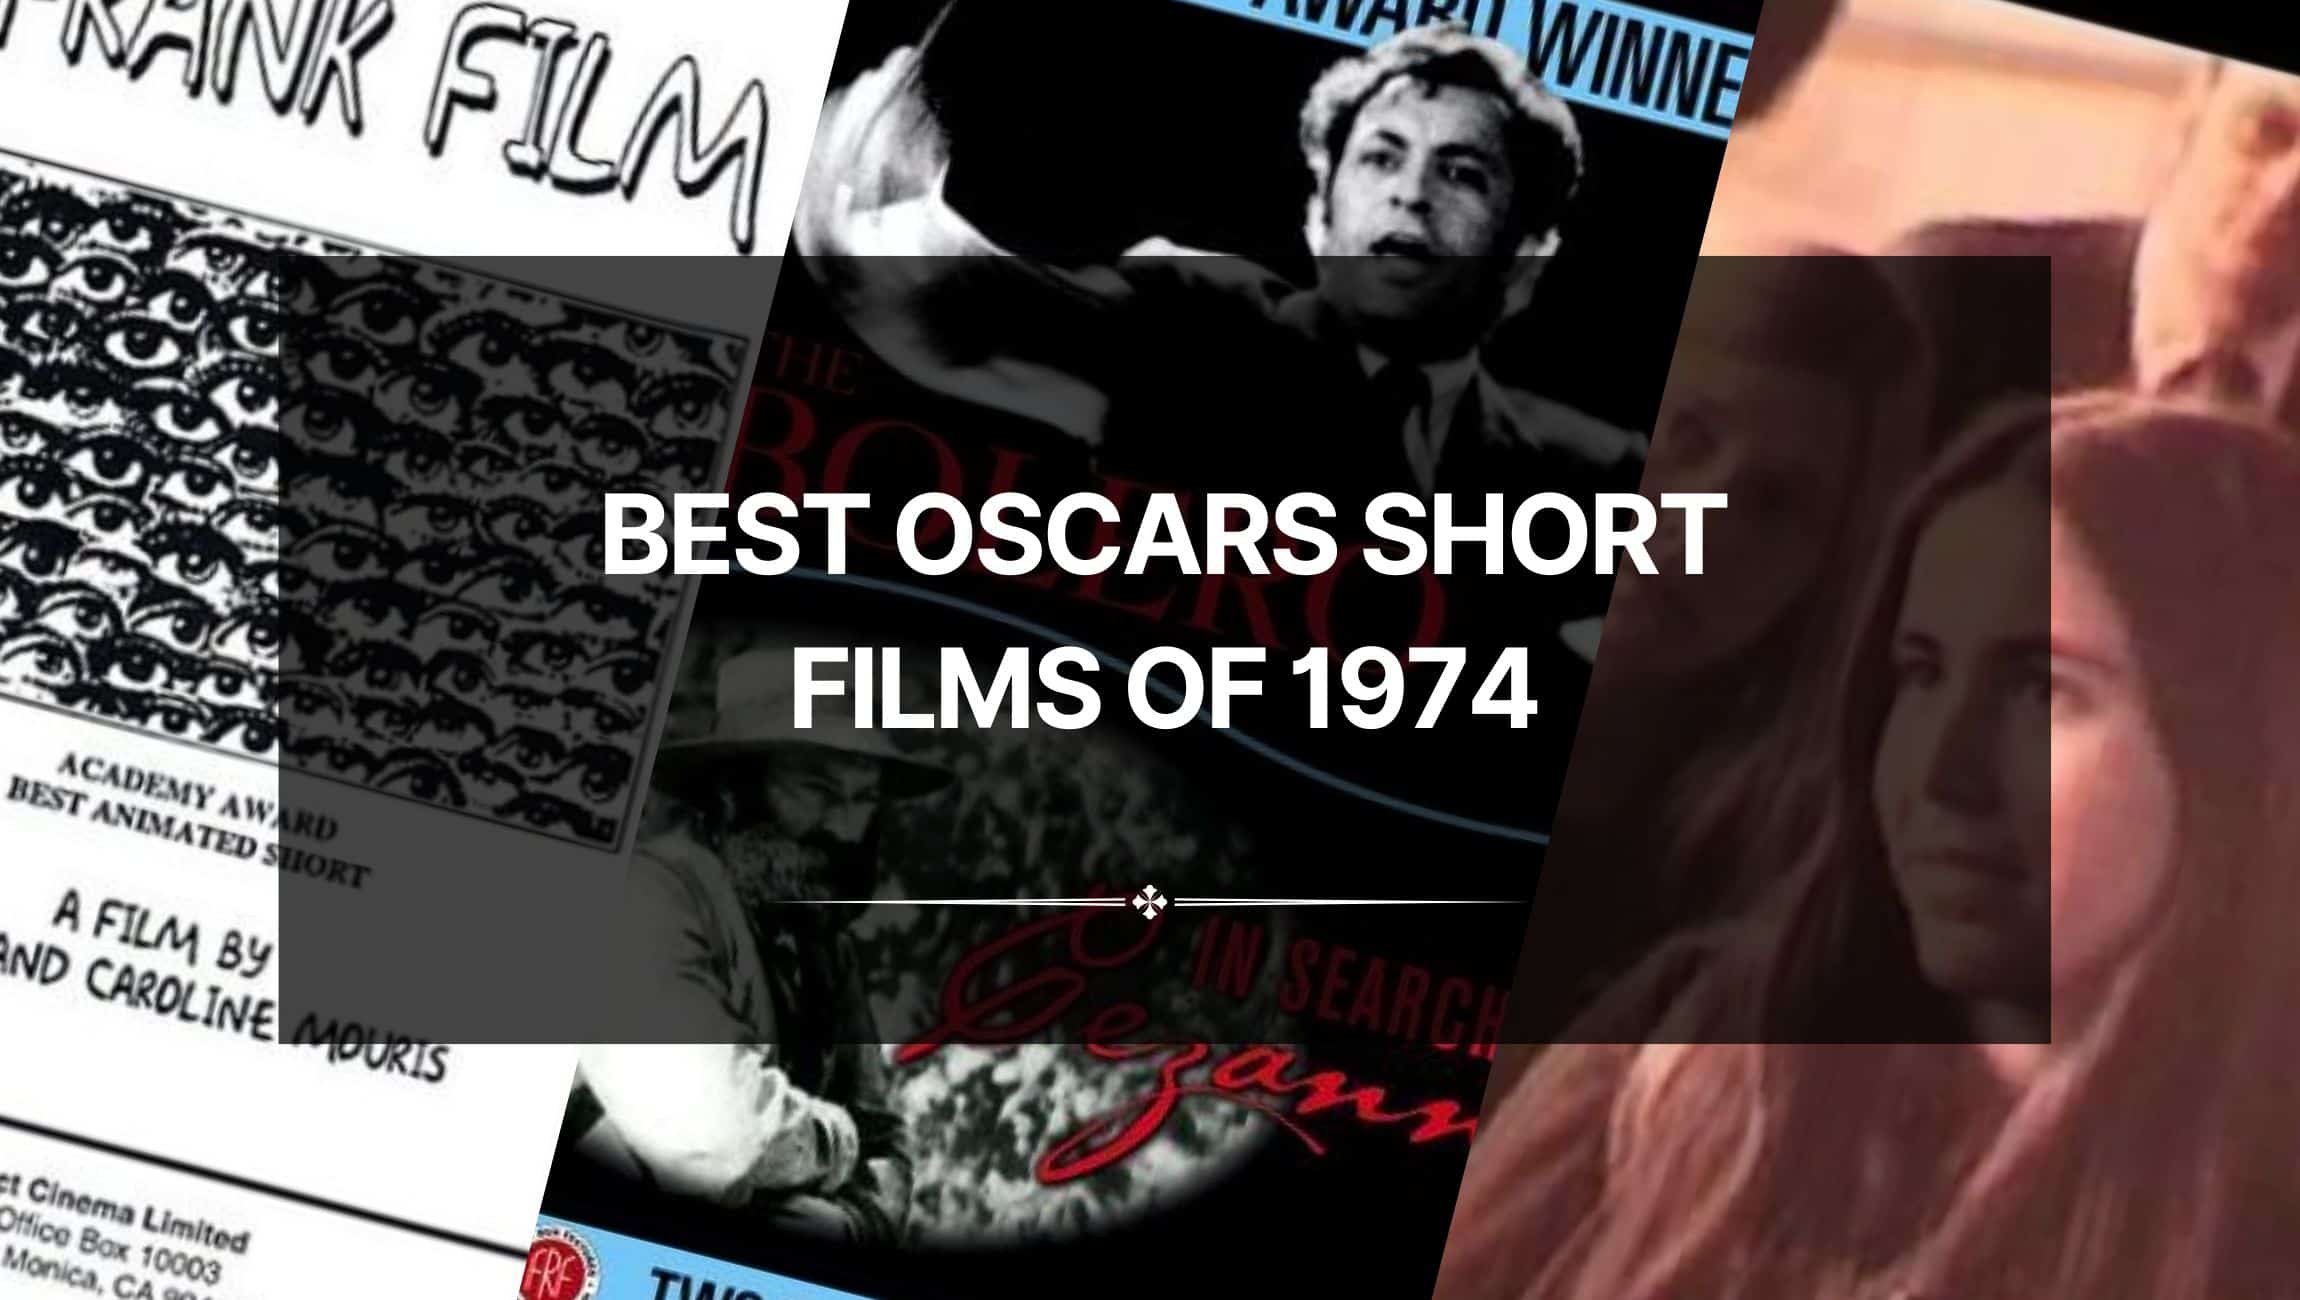 Best Oscars Short Films of 1974